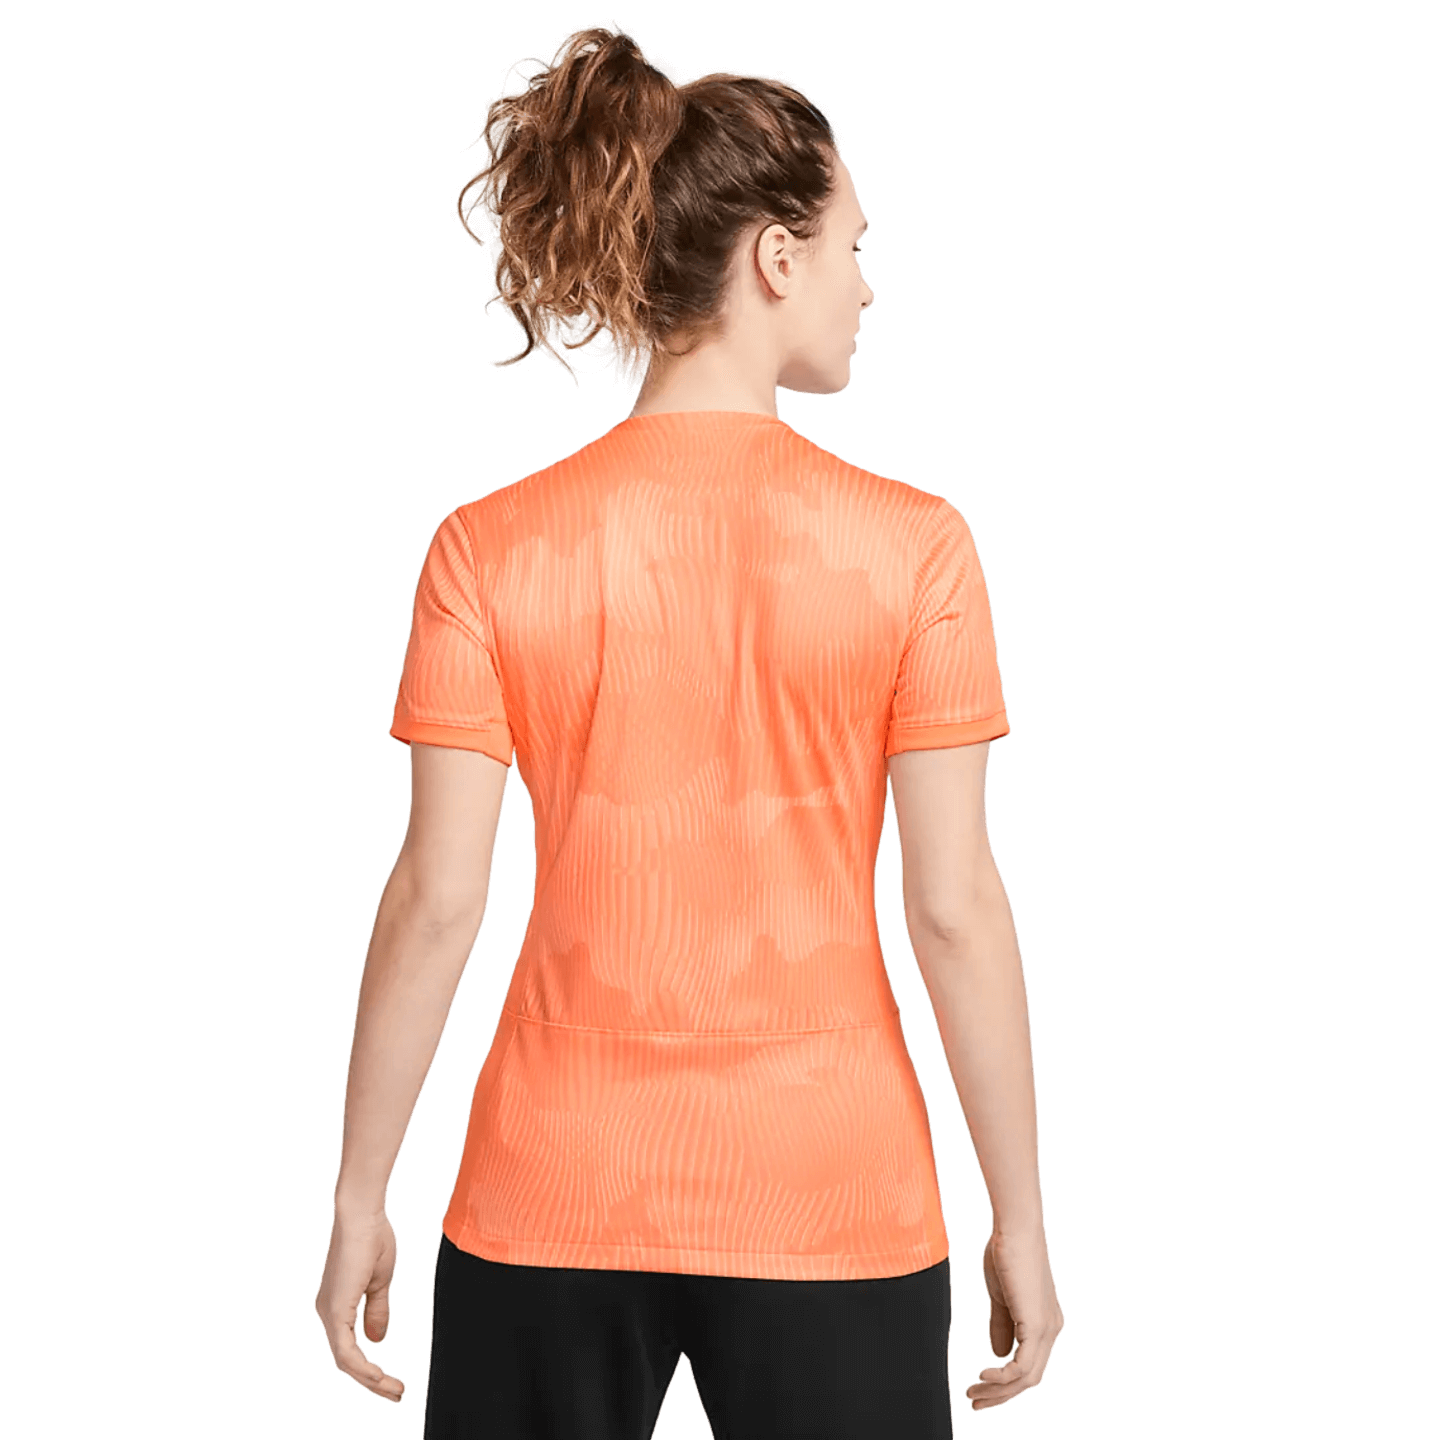 Camiseta Nike Holanda 2023 Primera equipación mujer